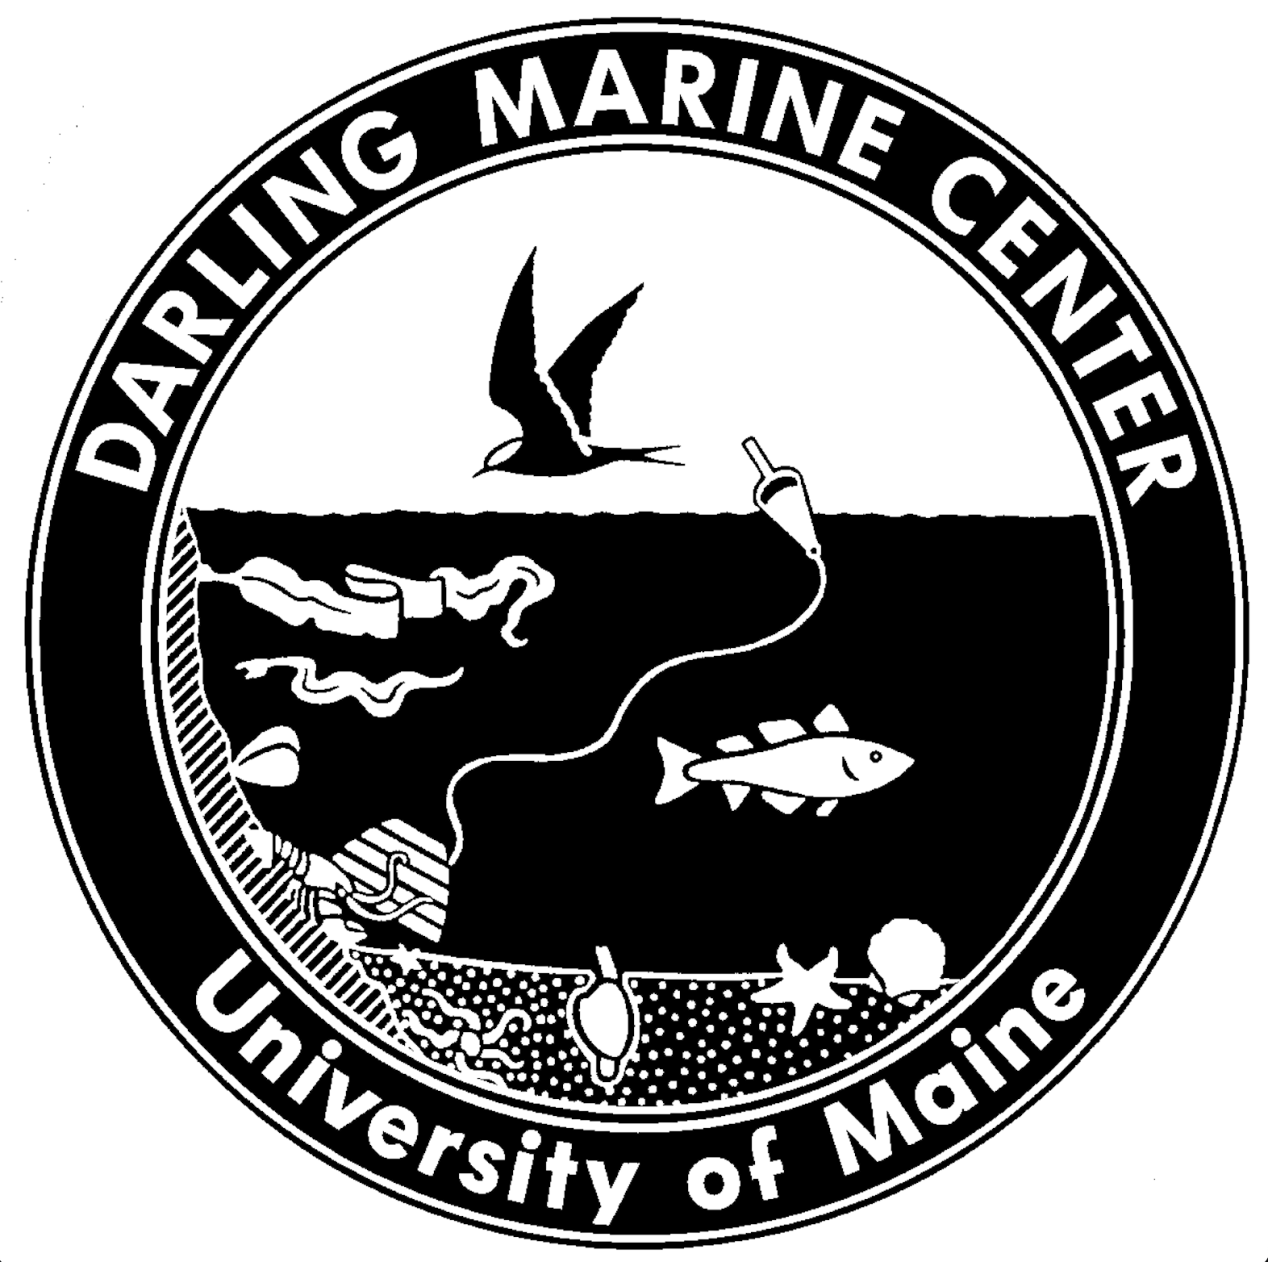 darling marine center logo